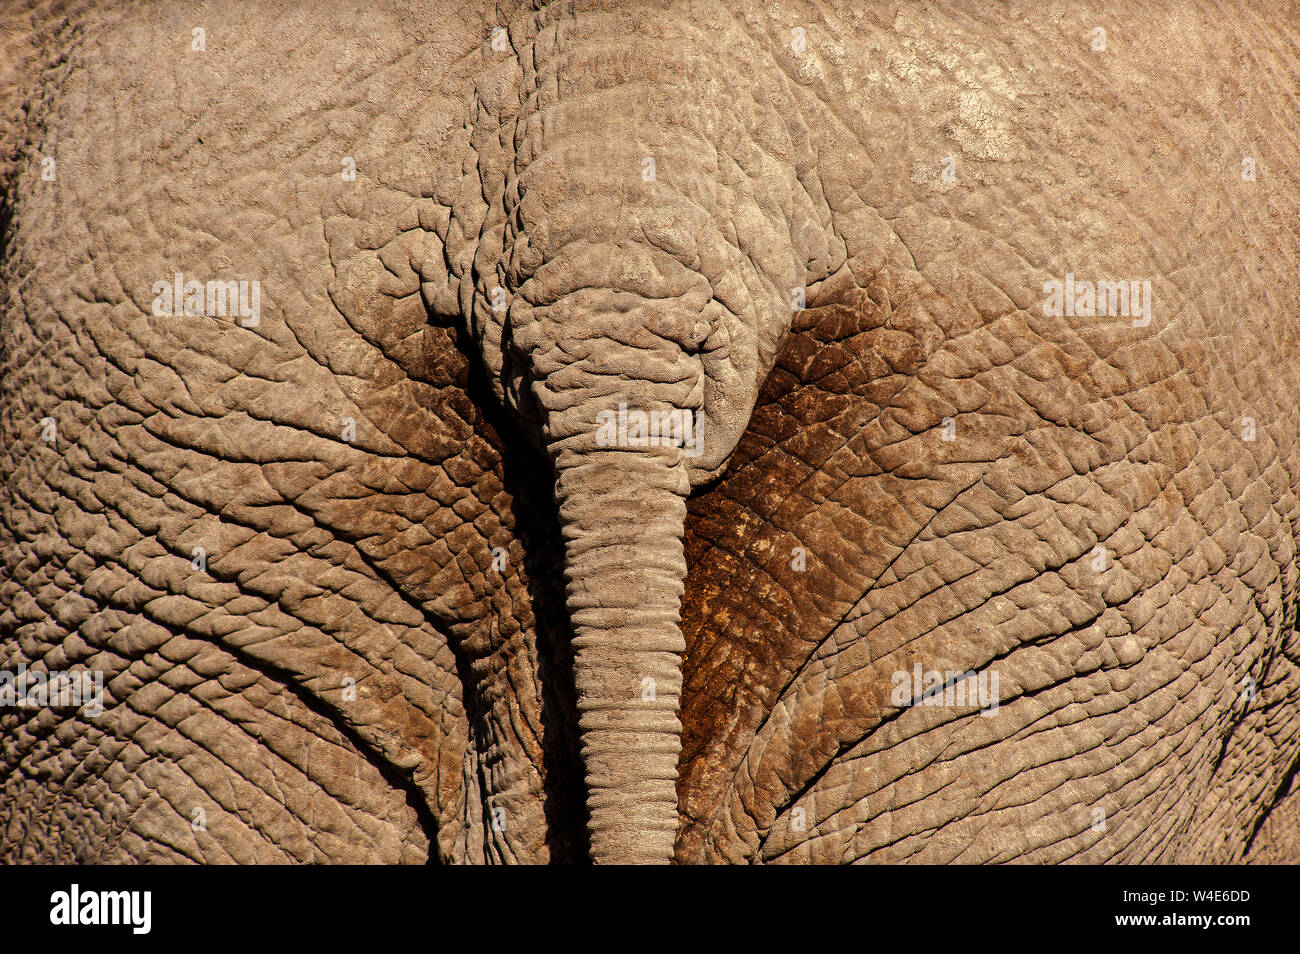 Close up of an elephant tail and botton, Okaukuejo waterhole, Etosha National Park, Namibia Stock Photo